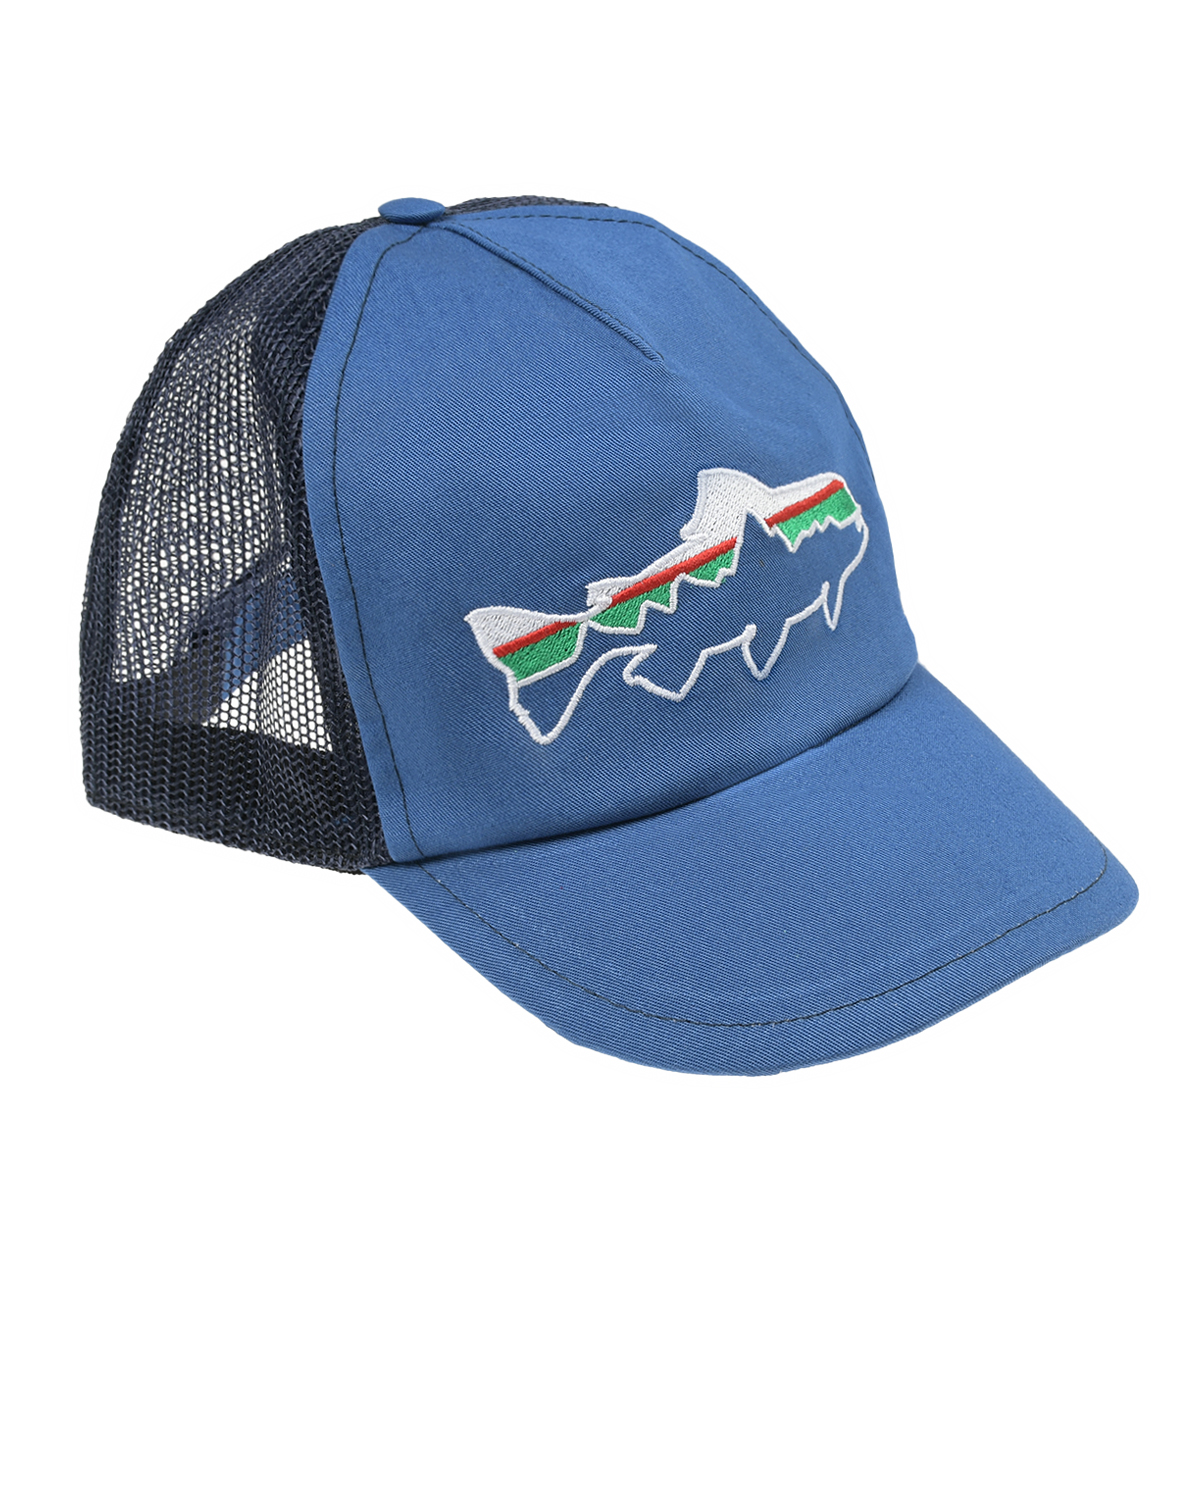 Синяя кепка с вышивкой "акула" Il Trenino, размер 54, цвет синий - фото 1